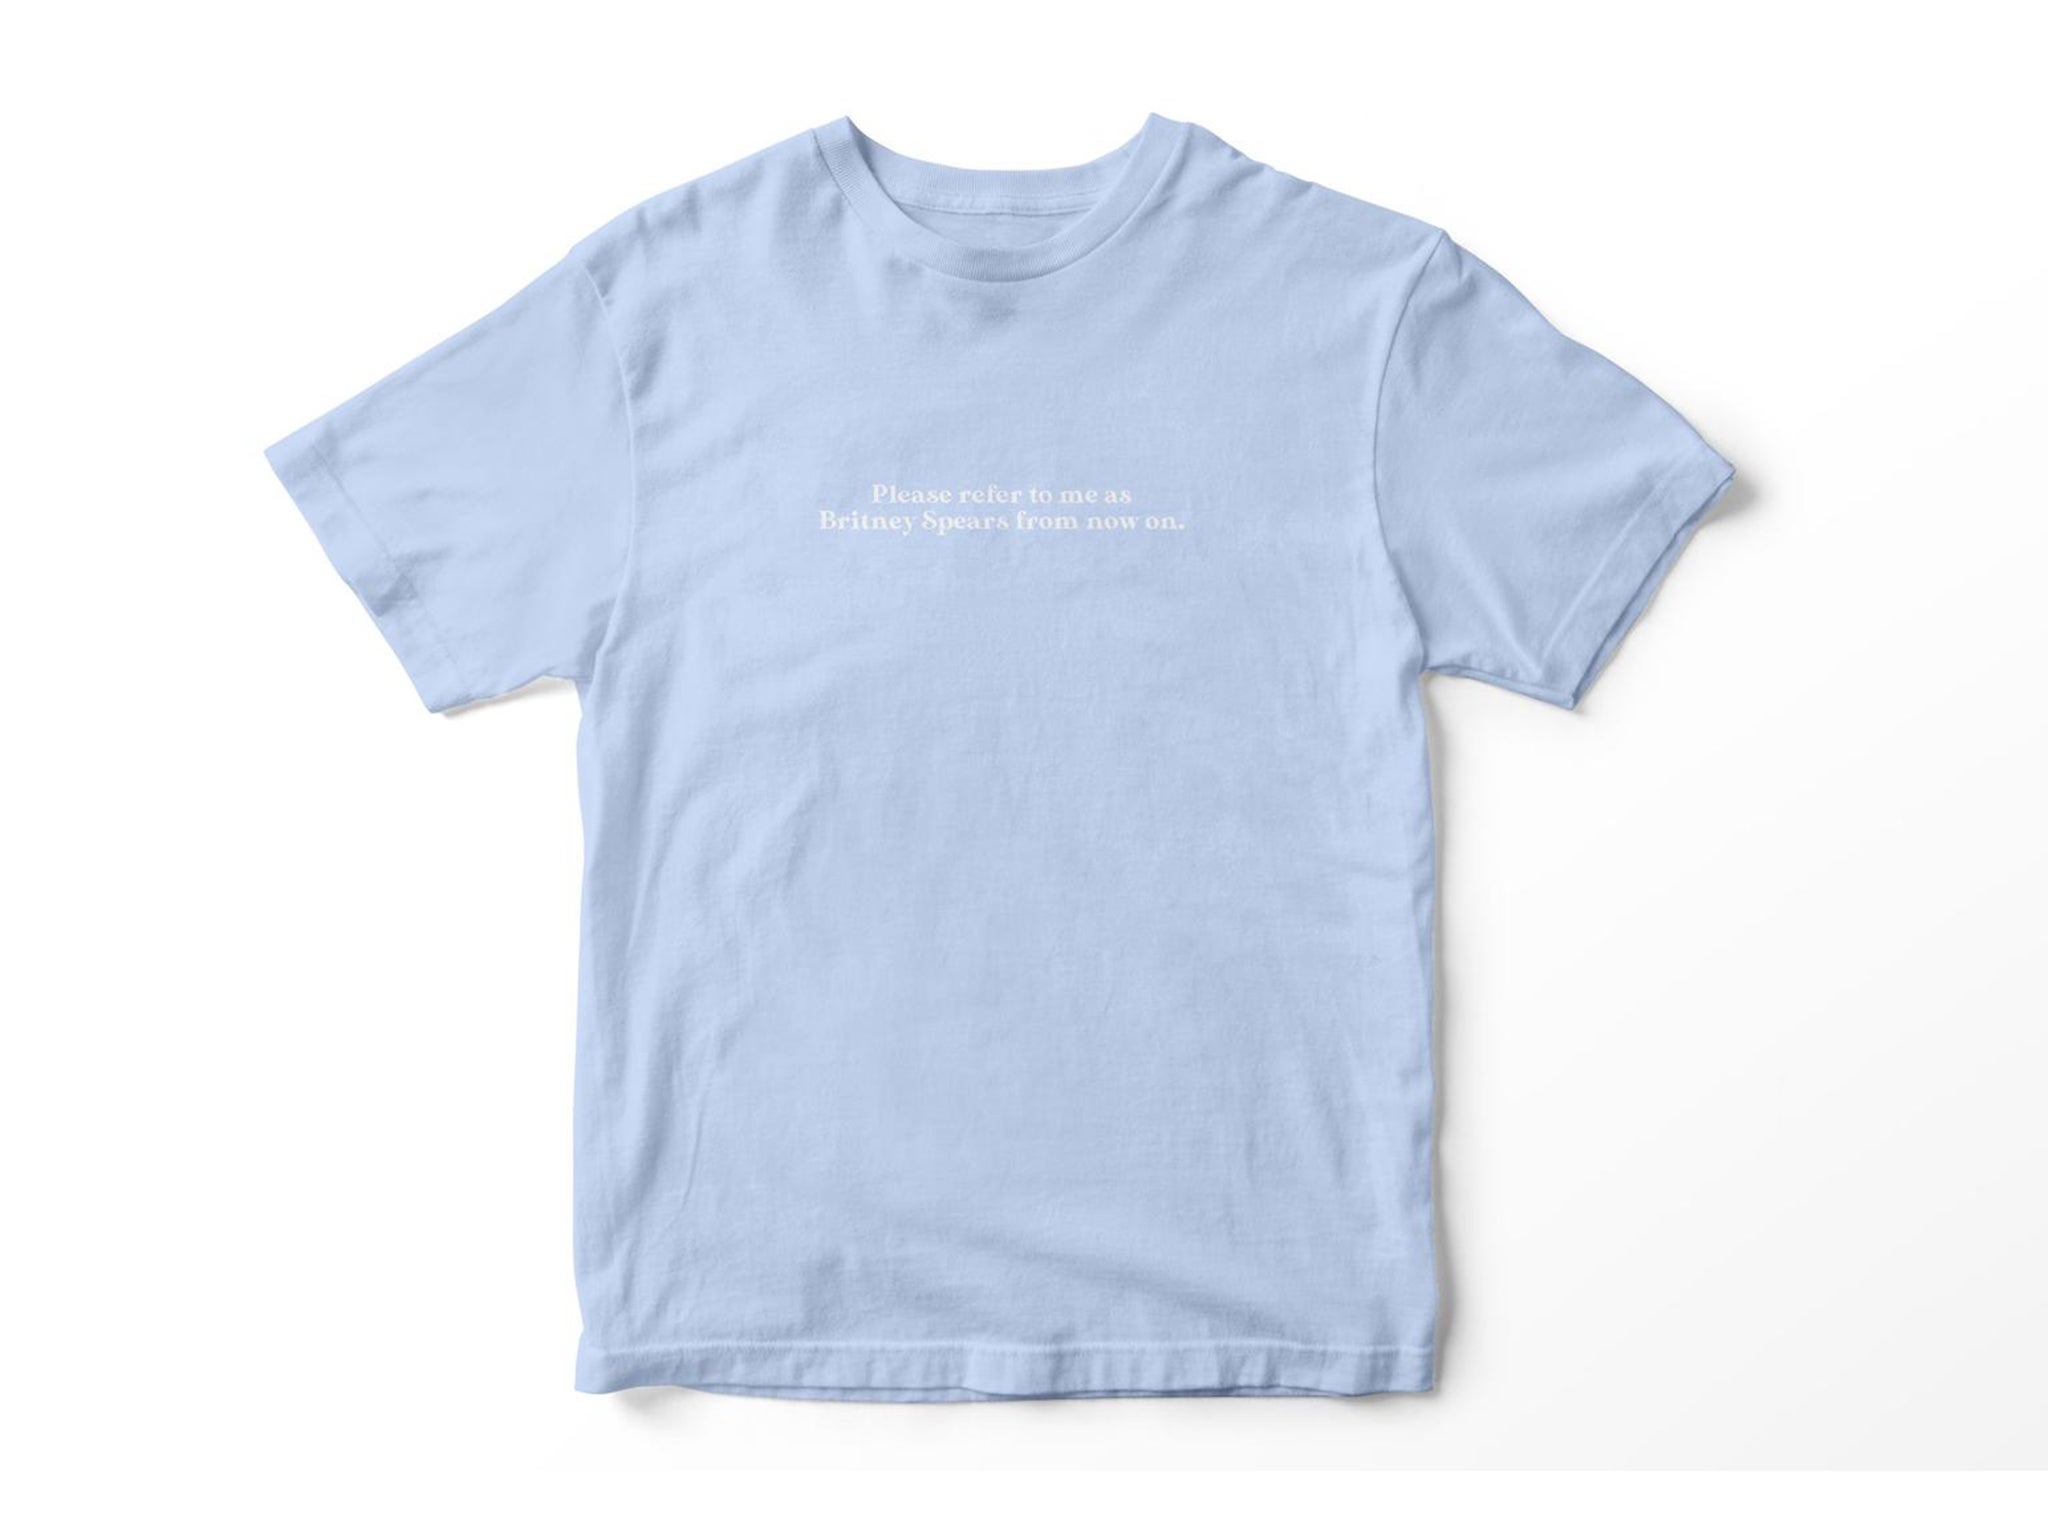 jackie-weaver-merch-t-shirt-indybest.jpg